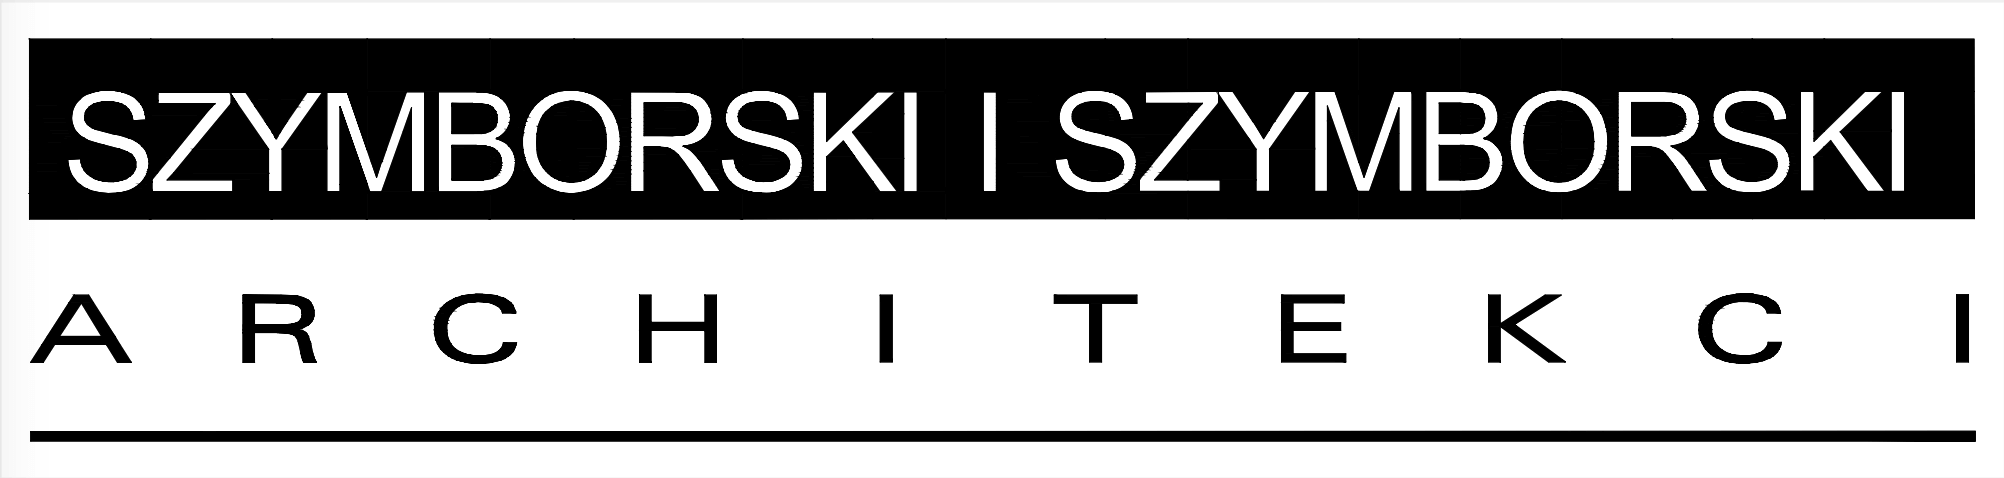 szymborski-logo